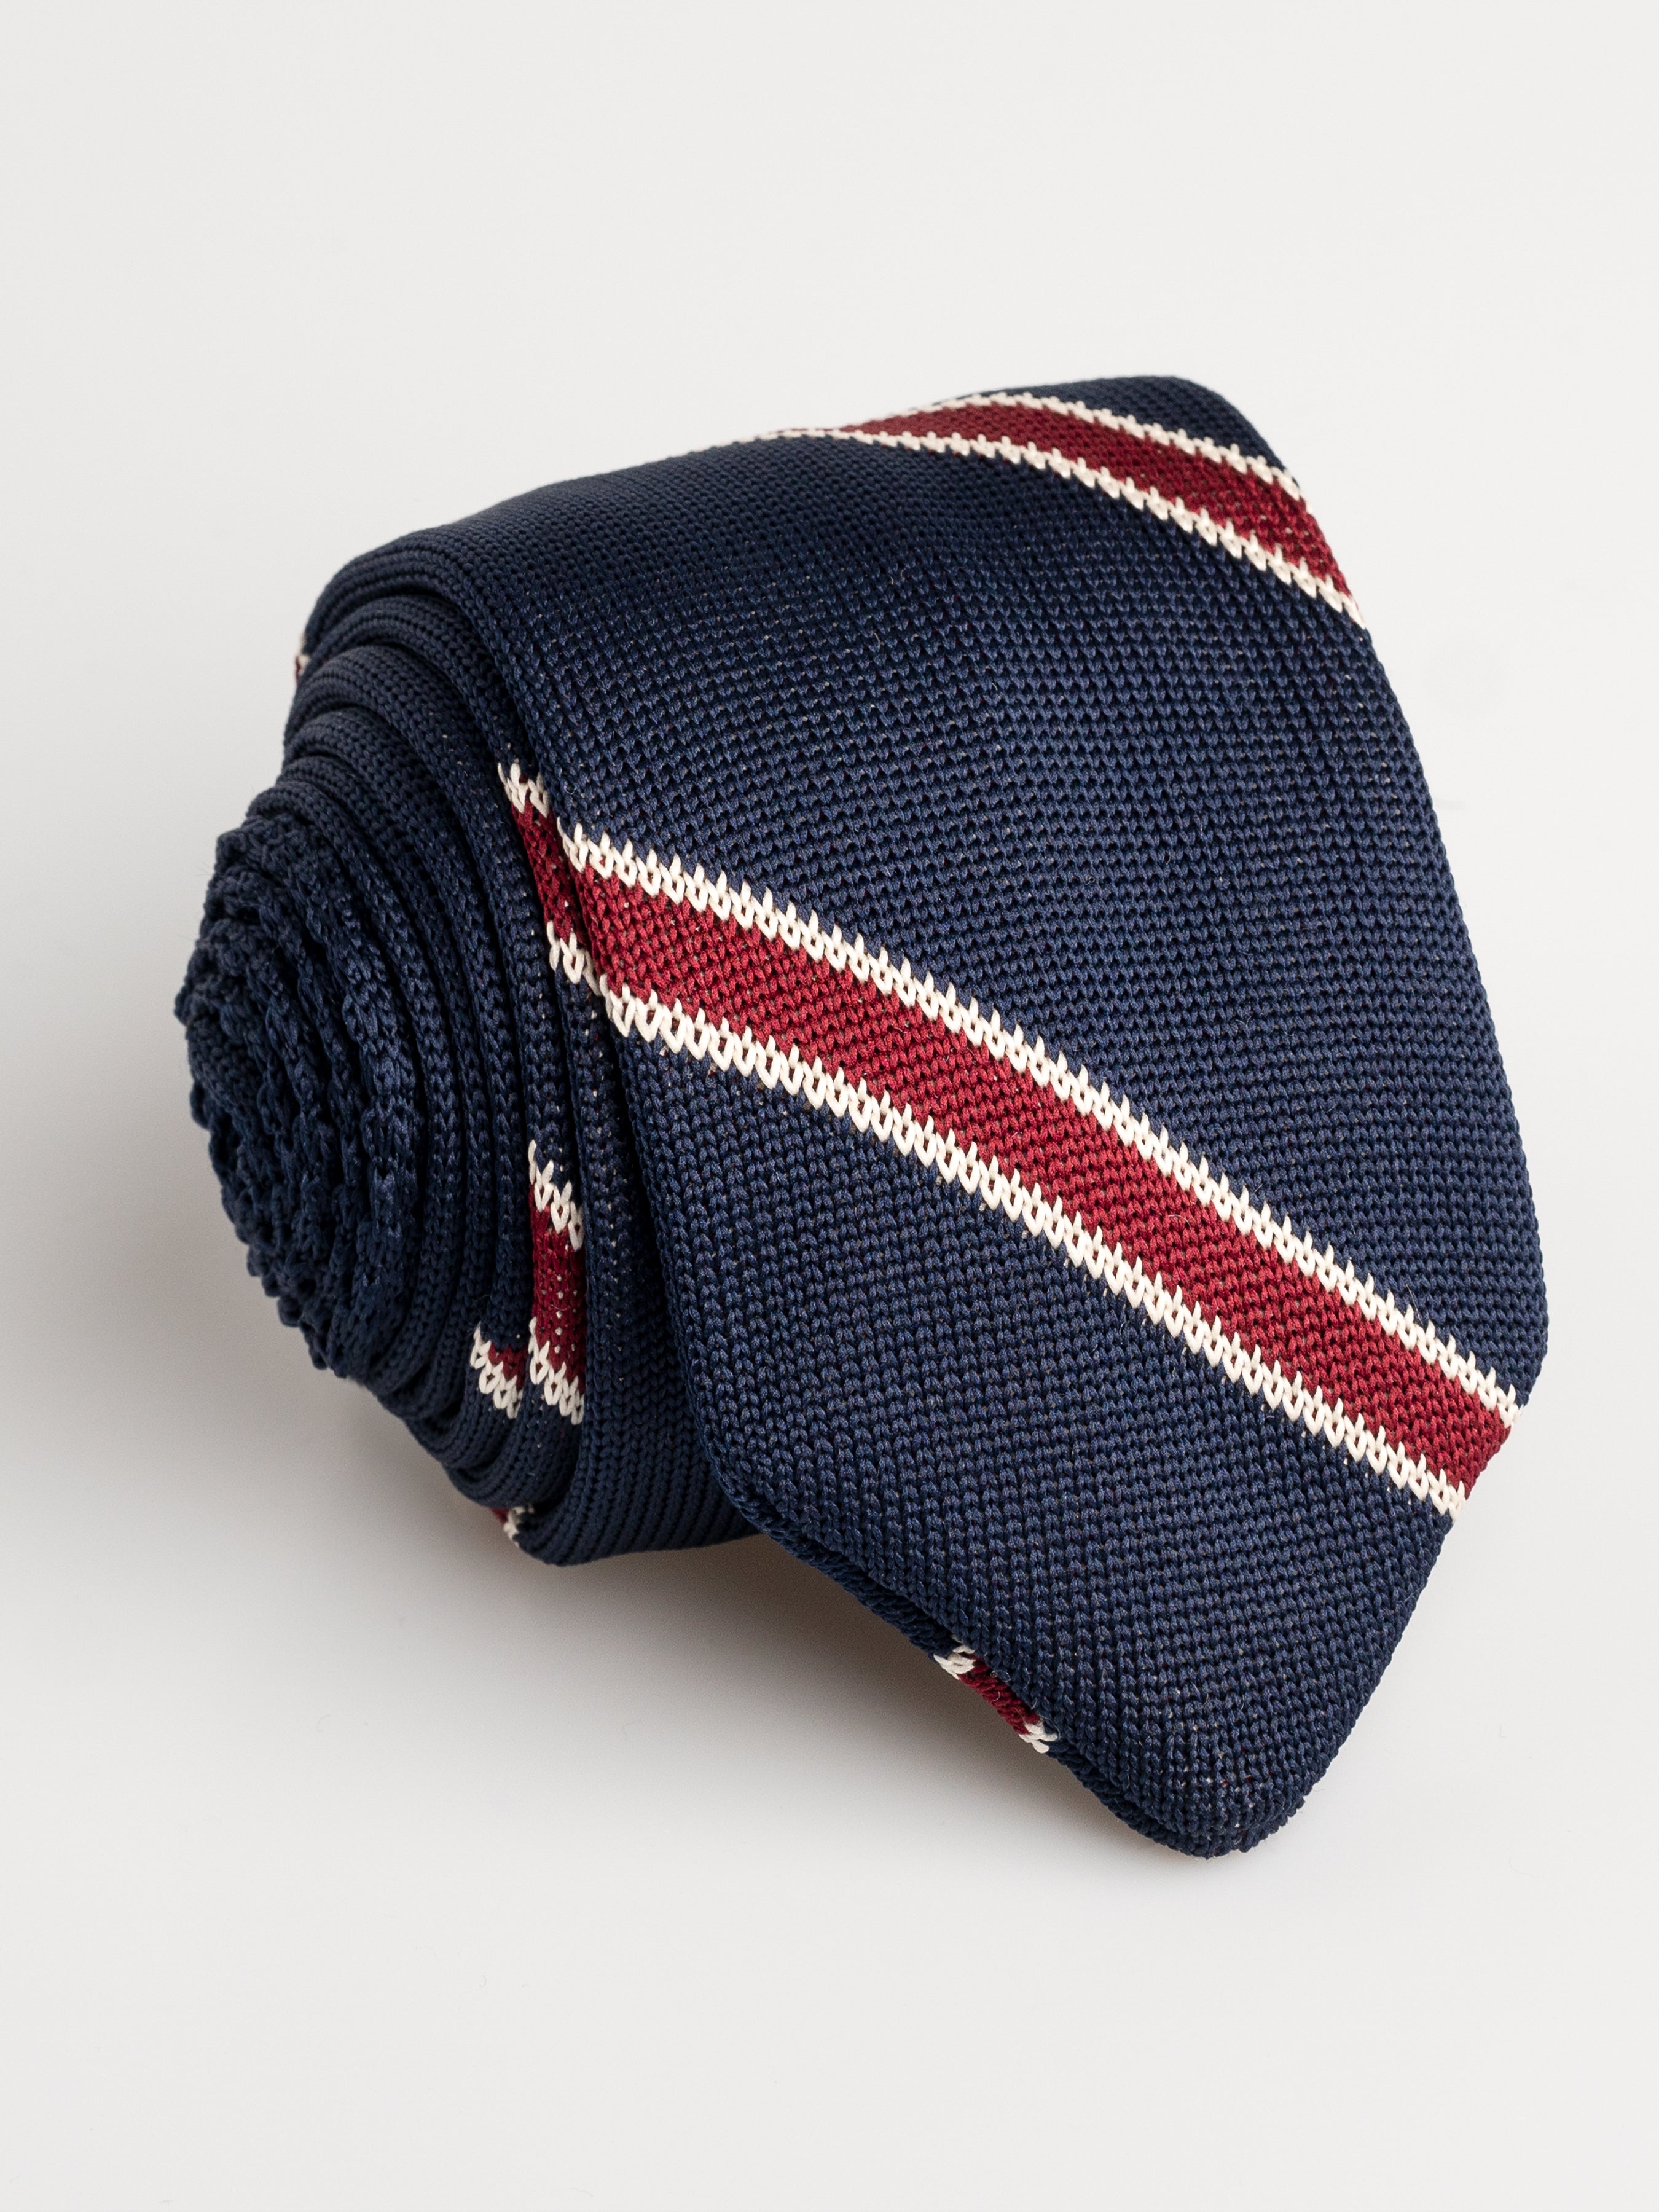 Knit Tie - Navy Blue Red White Stripes